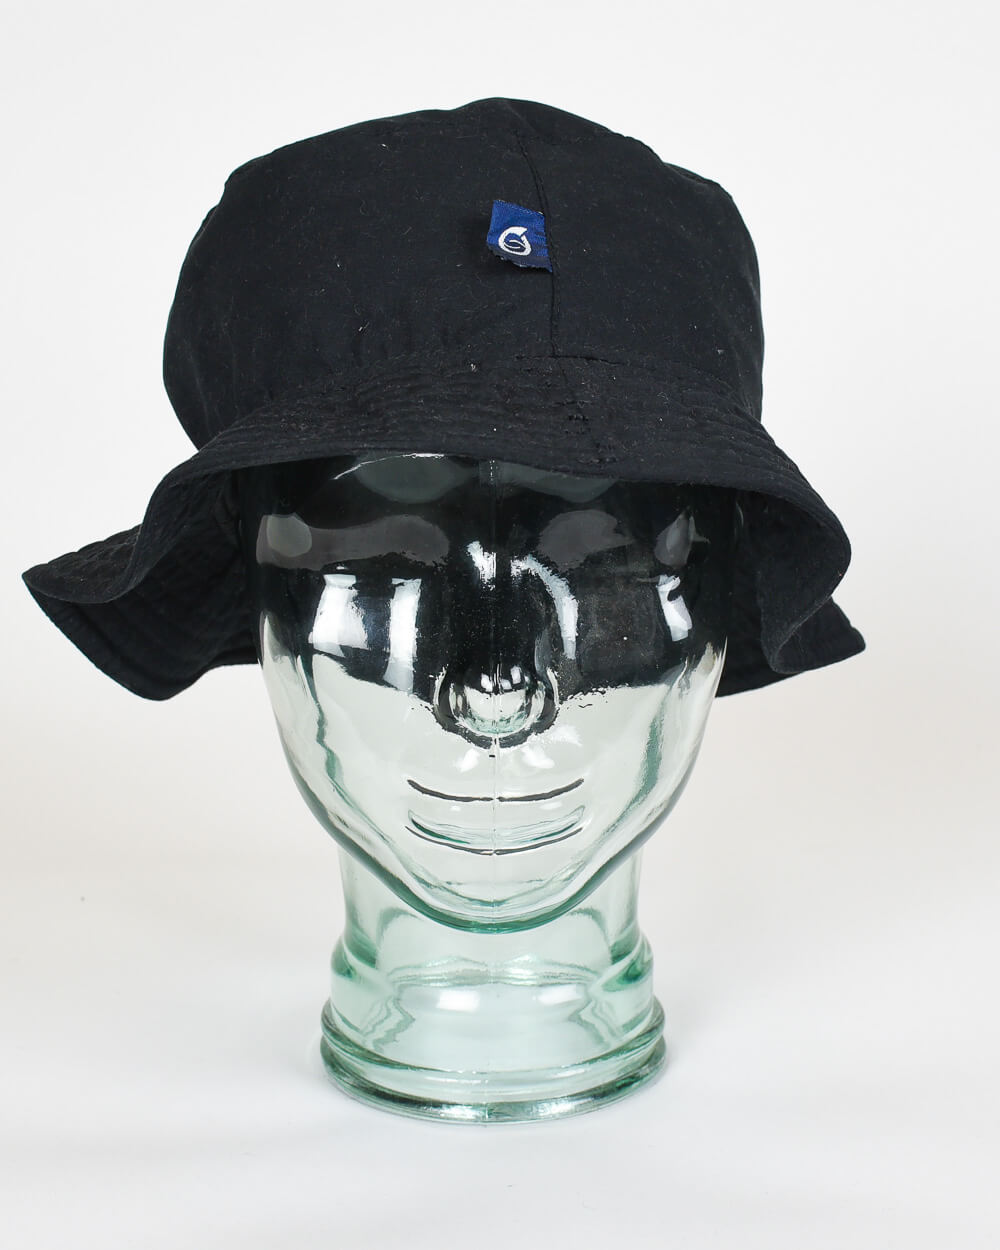 Black Vintage Bucket Hat   